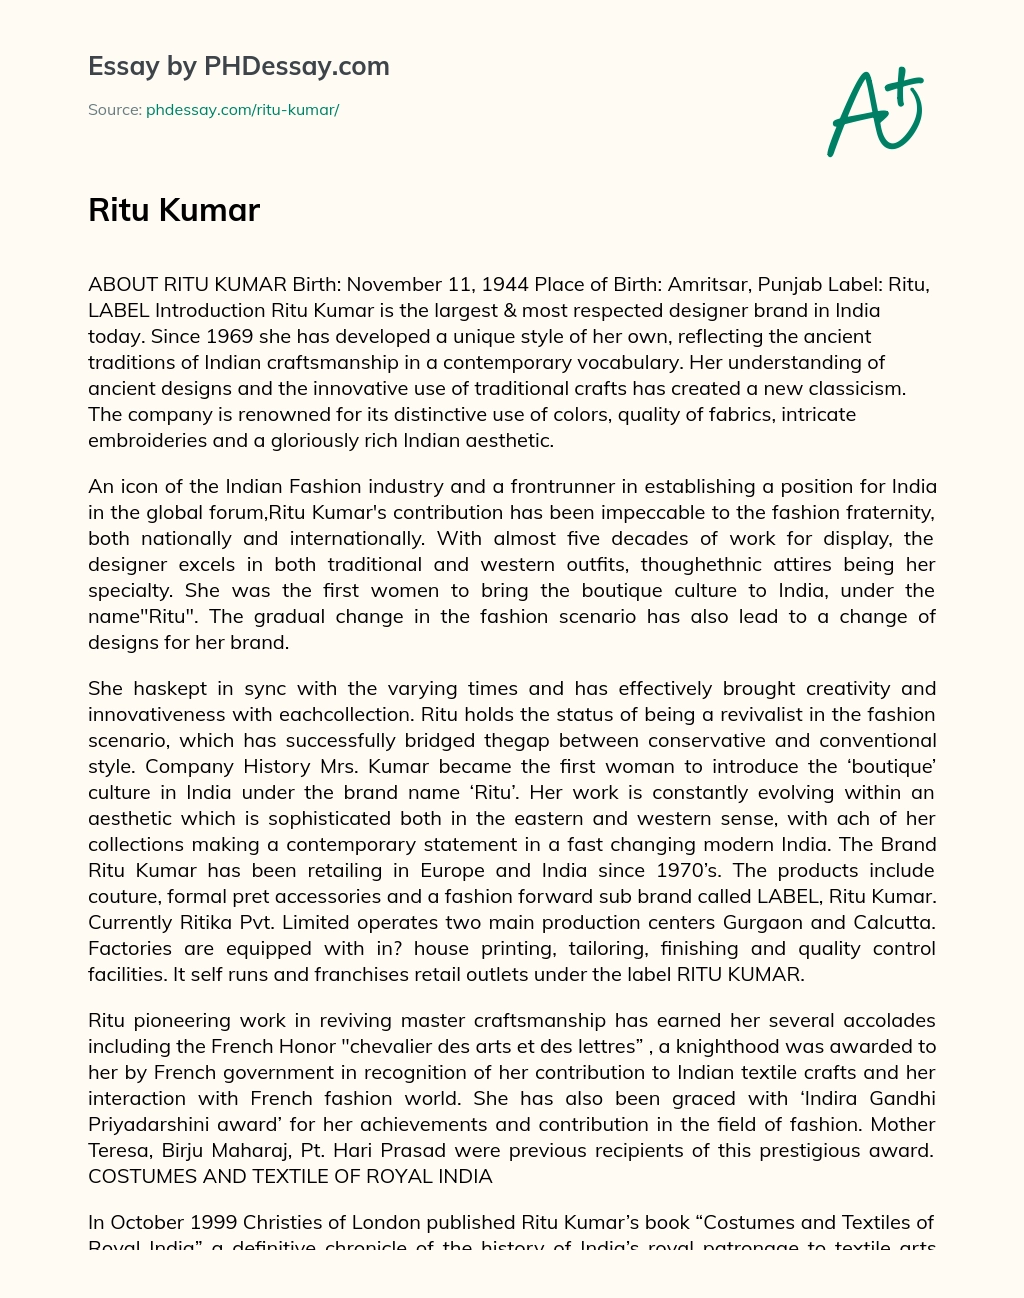 Ritu Kumar: A Pioneer in Indian Fashion Industry essay